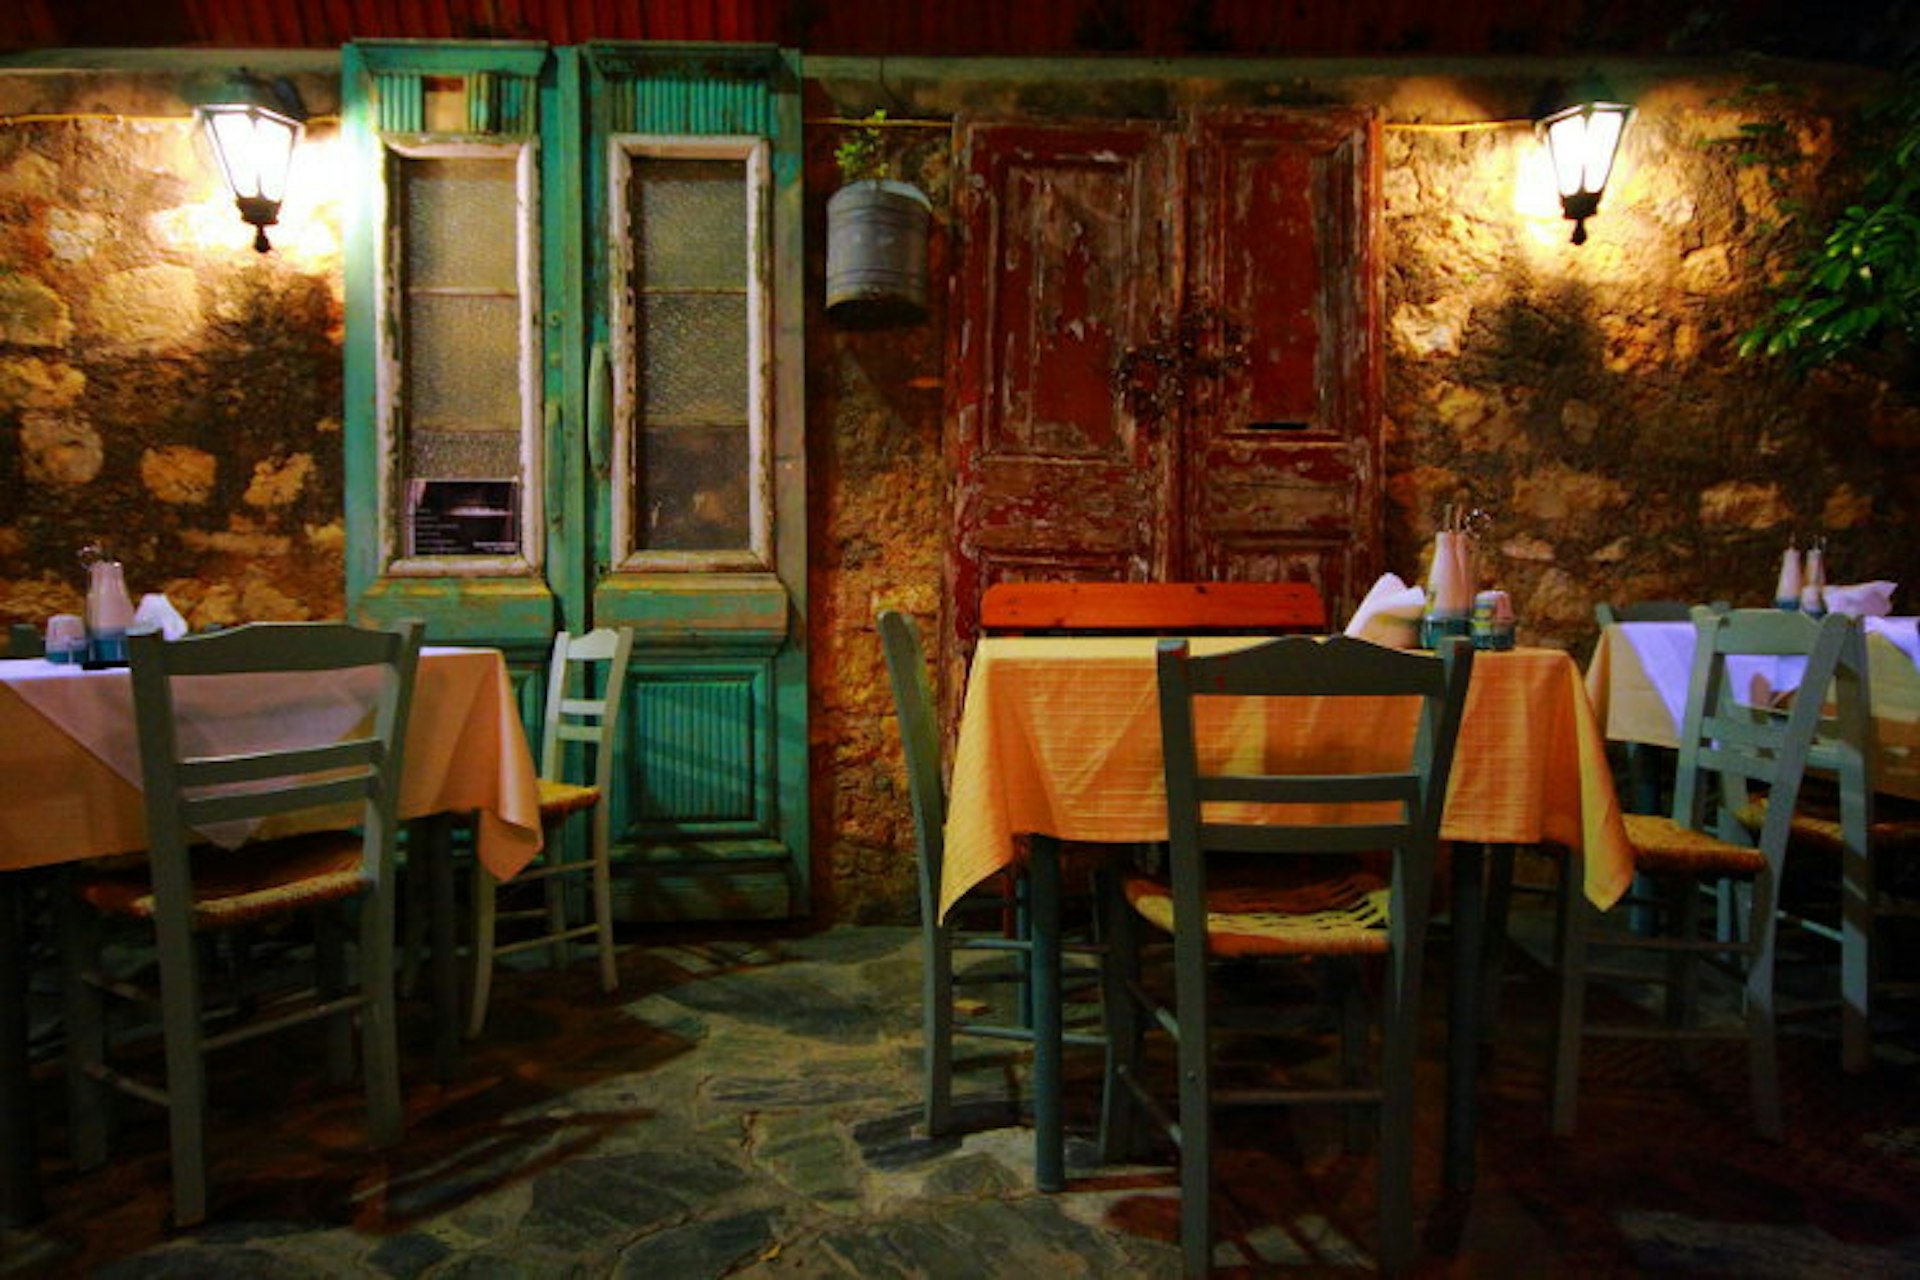 Portes restaurant in Hania, Crete. Image by Vassil Tzvetanov / CC BY 2.0